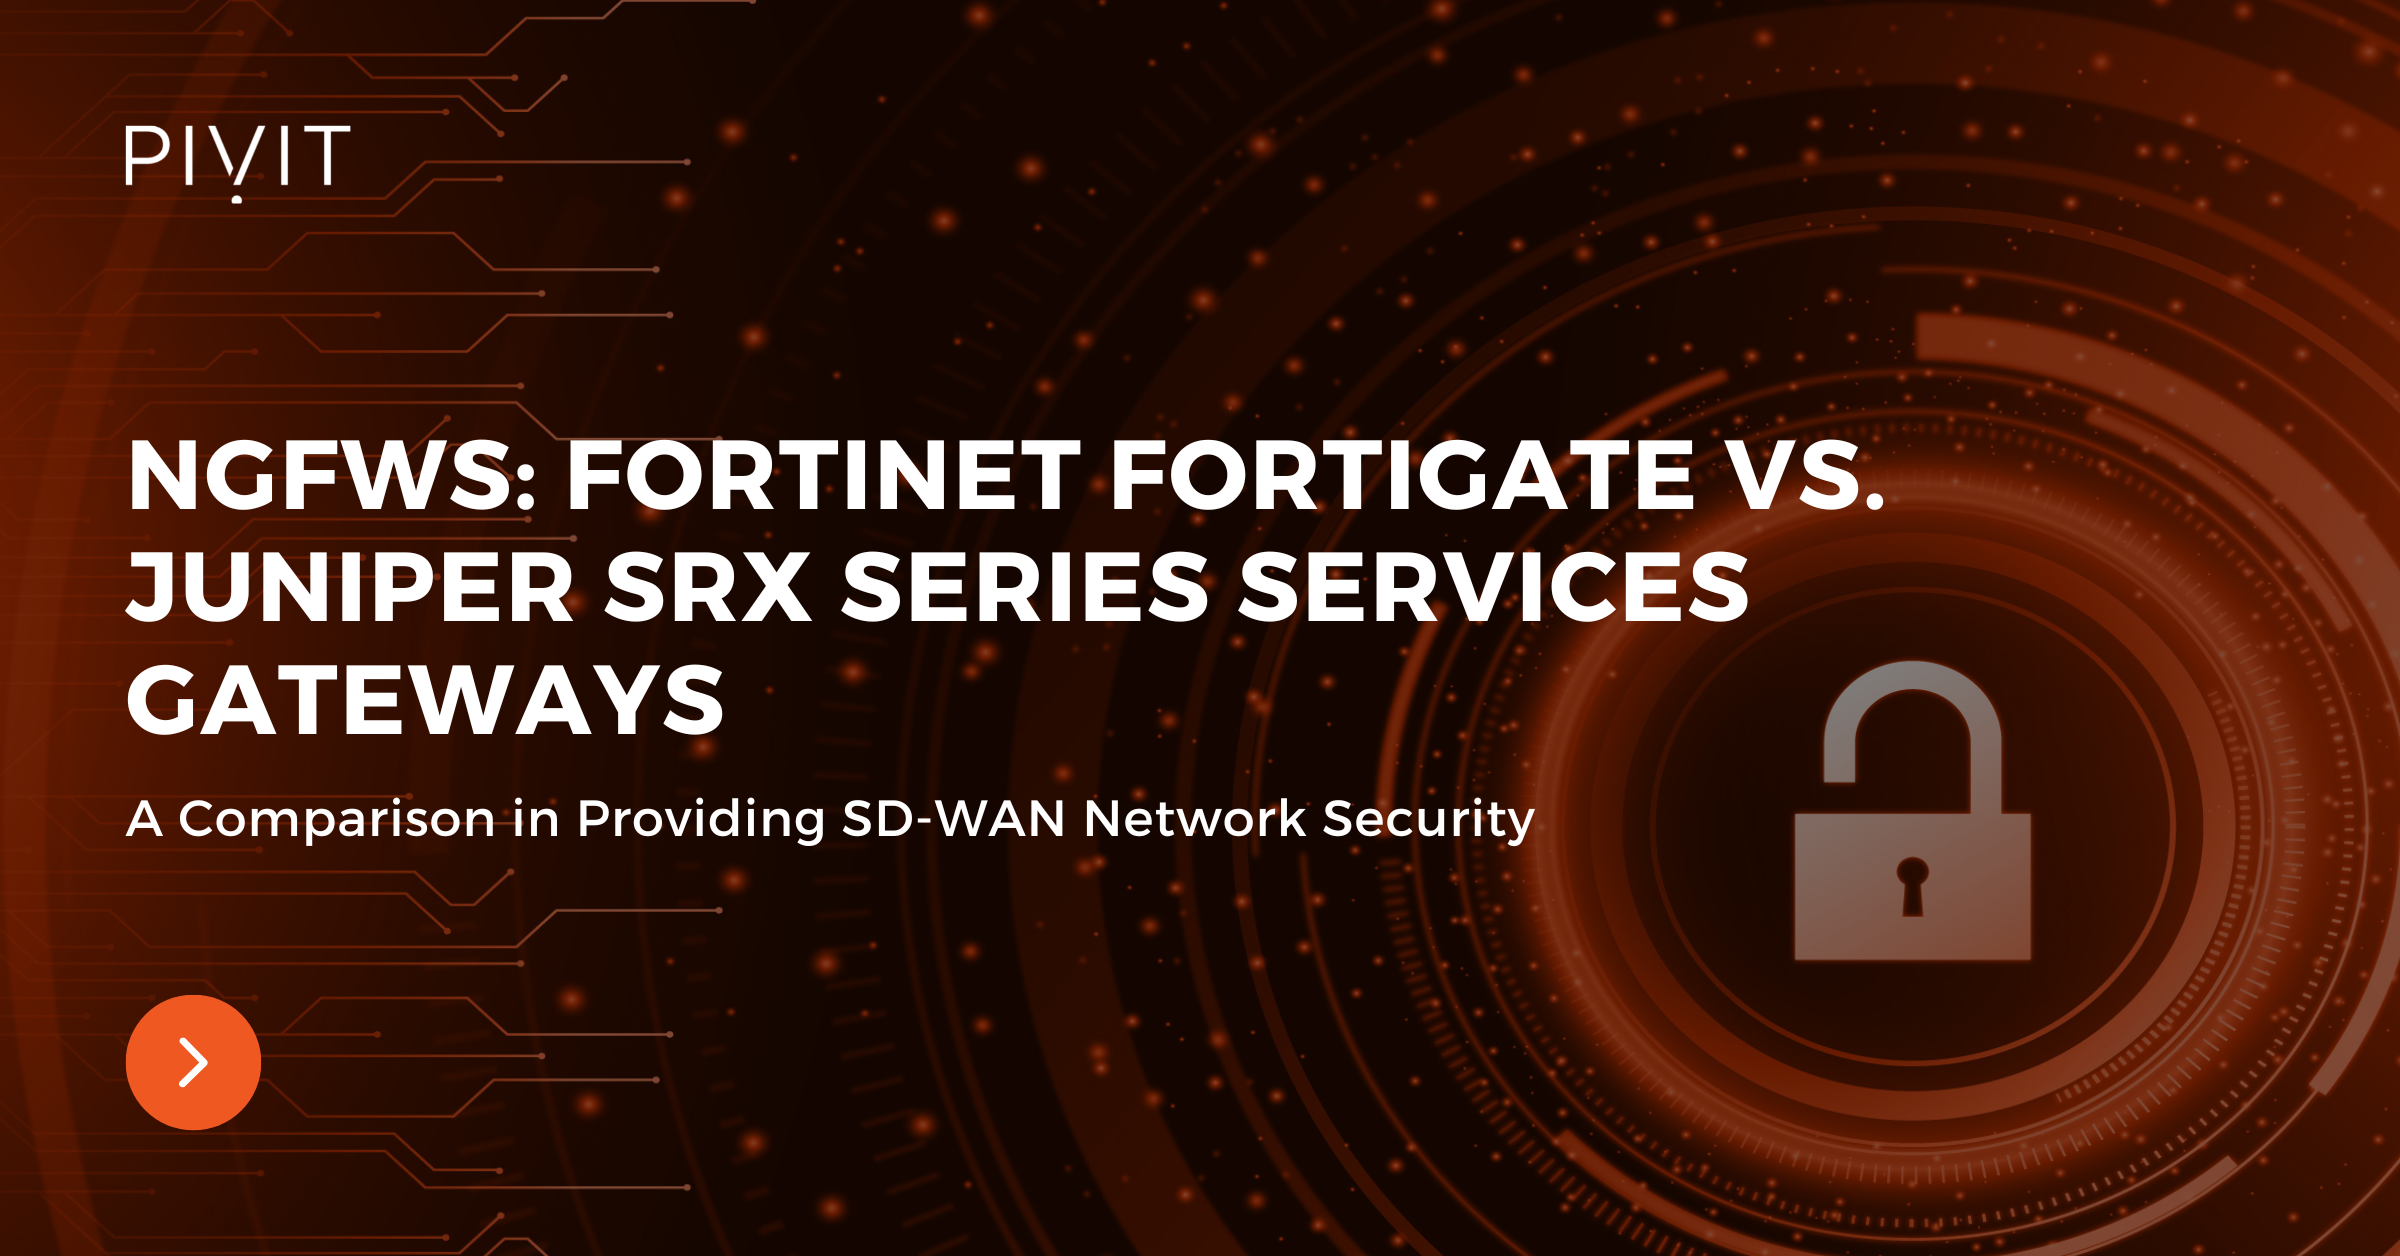 NGFWs: Fortinet FortiGate vs. Juniper SRX Series Services Gateways